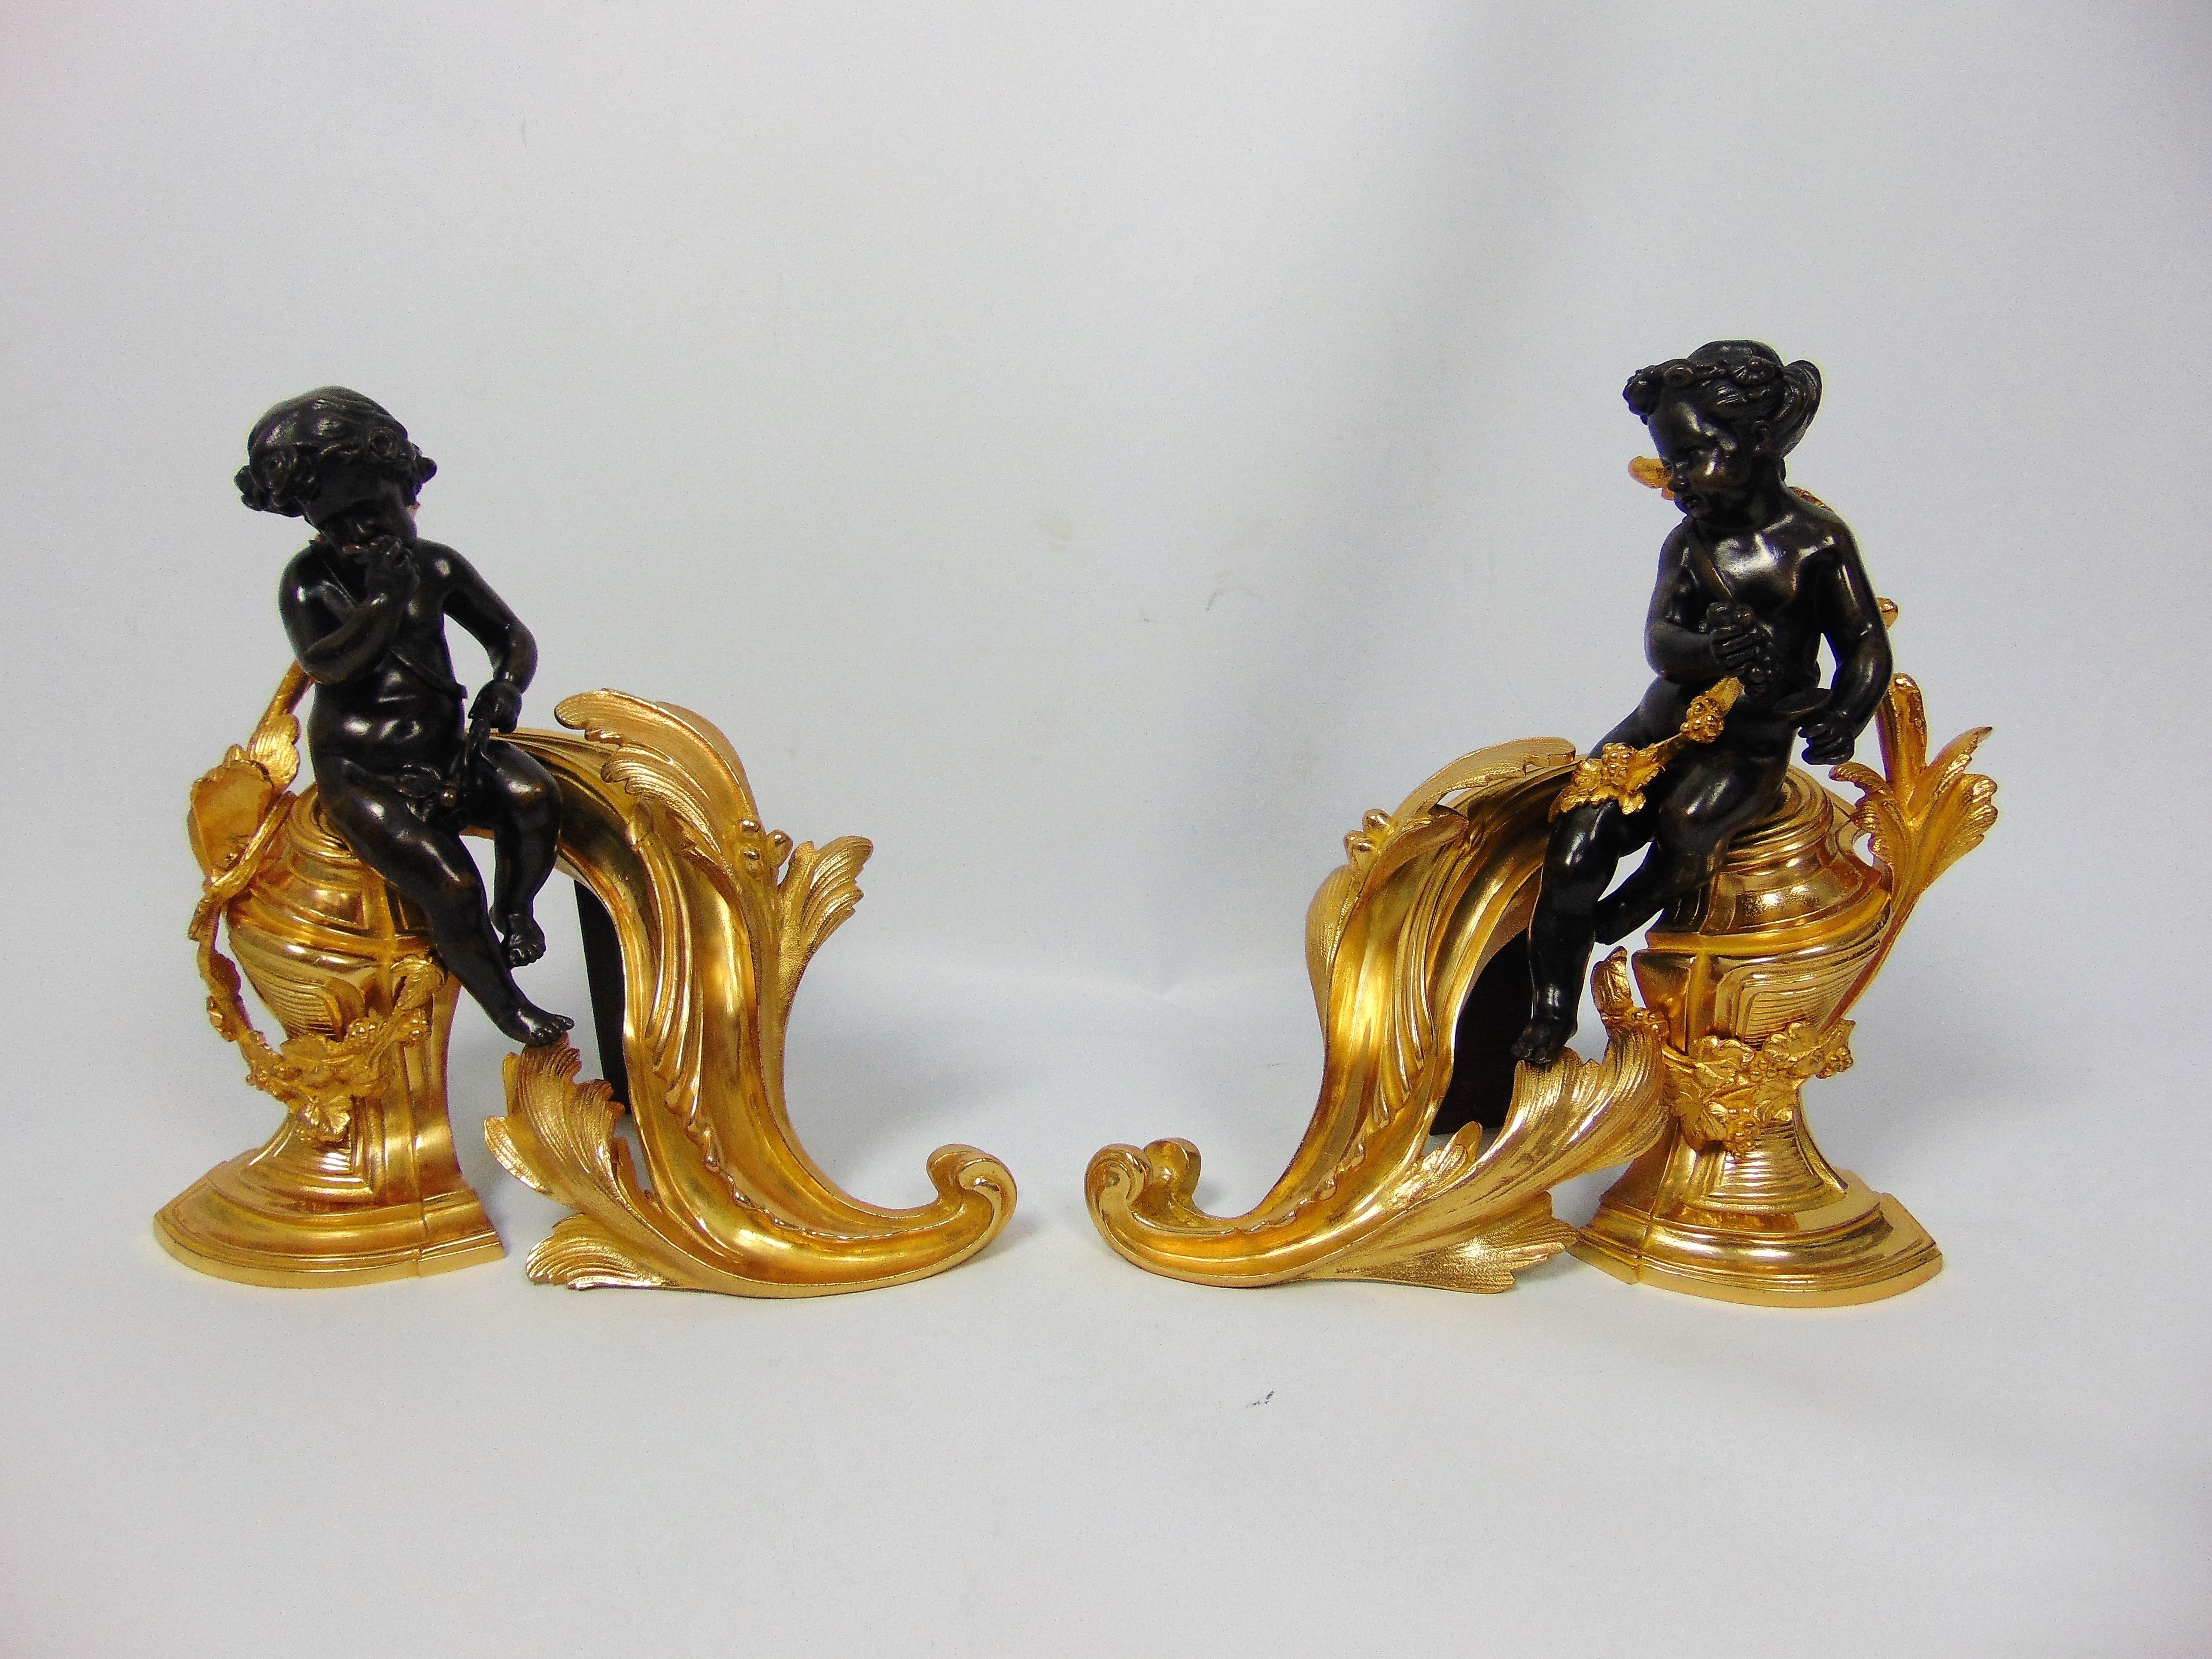 Rococo Pair Cast Chenet in the Form of Bronze Cherubs / Putti